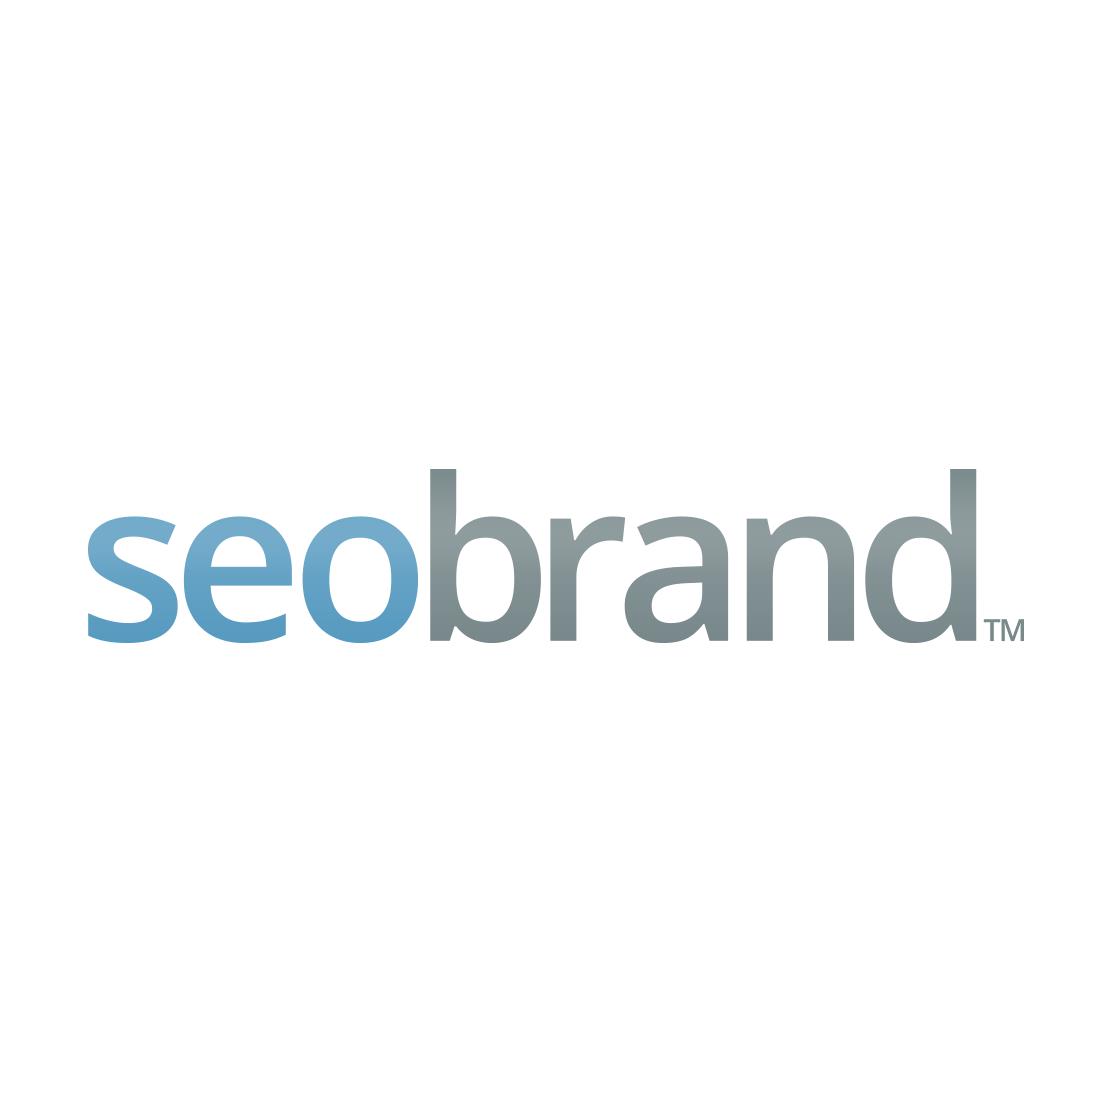 Best NYC SEO Firm Logo: SEO Brand